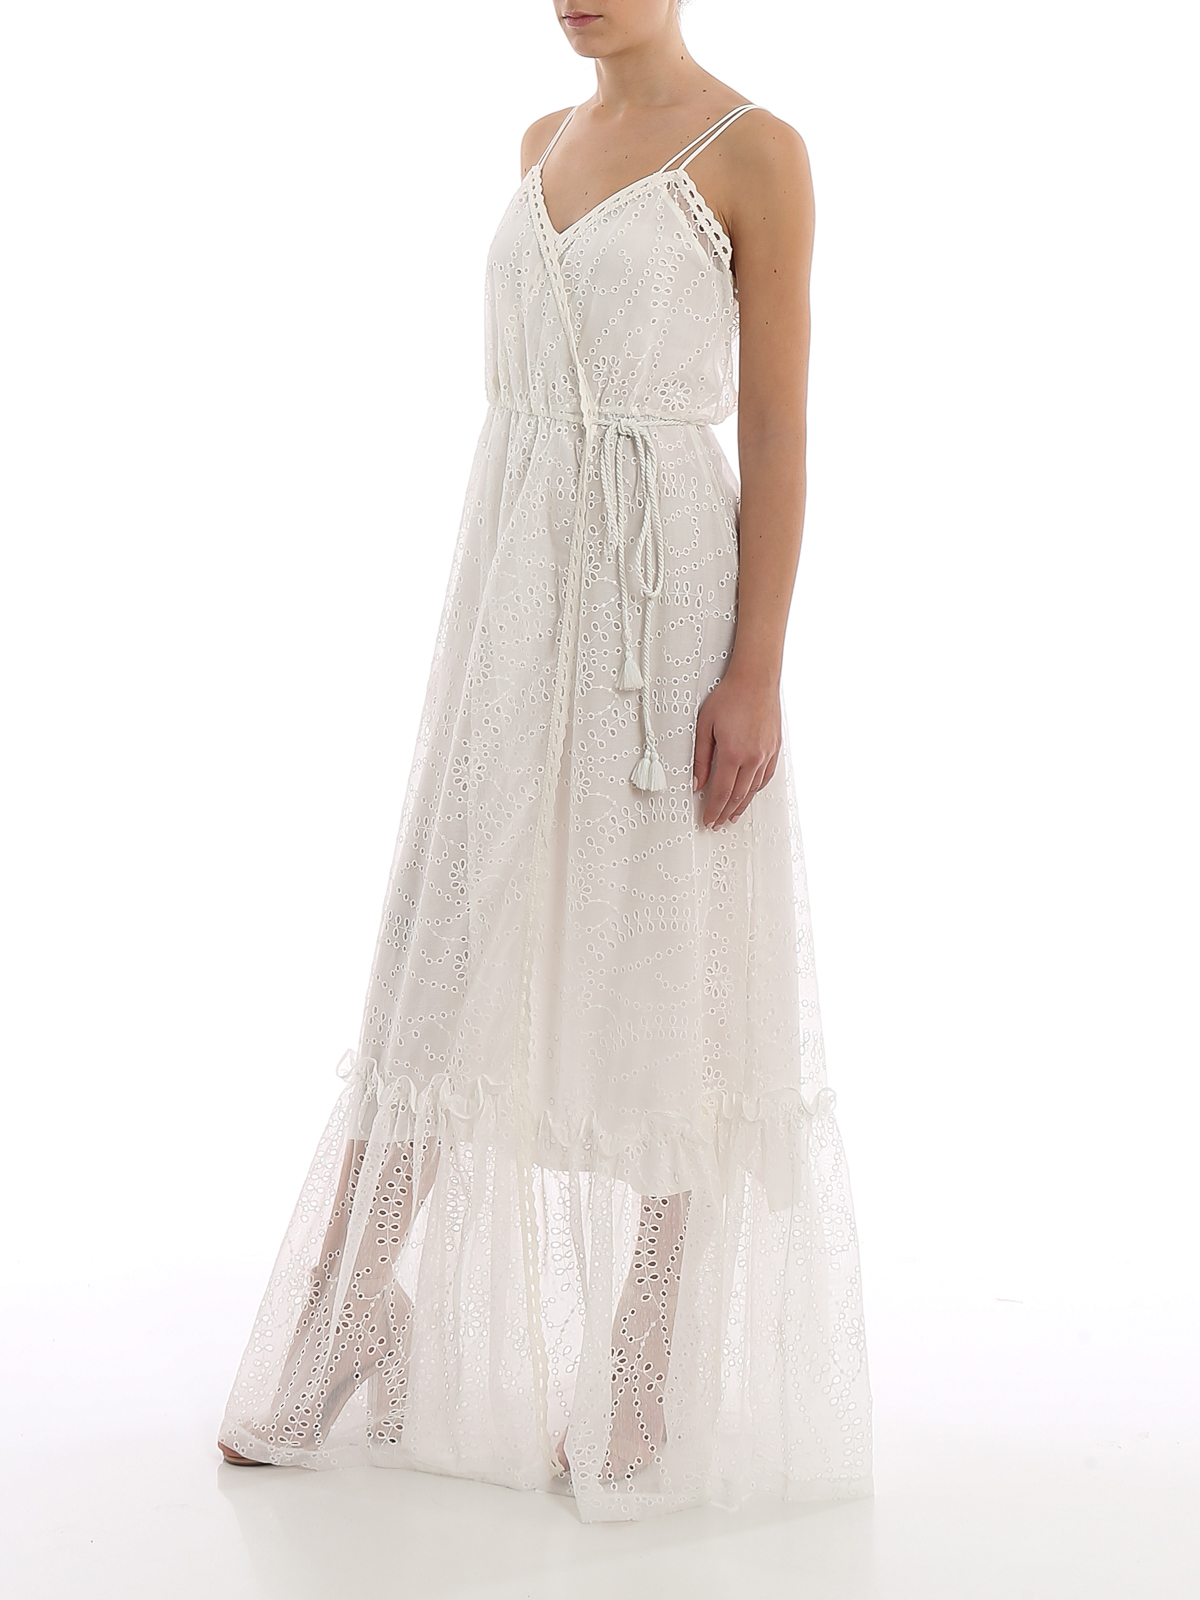 pinko white dress